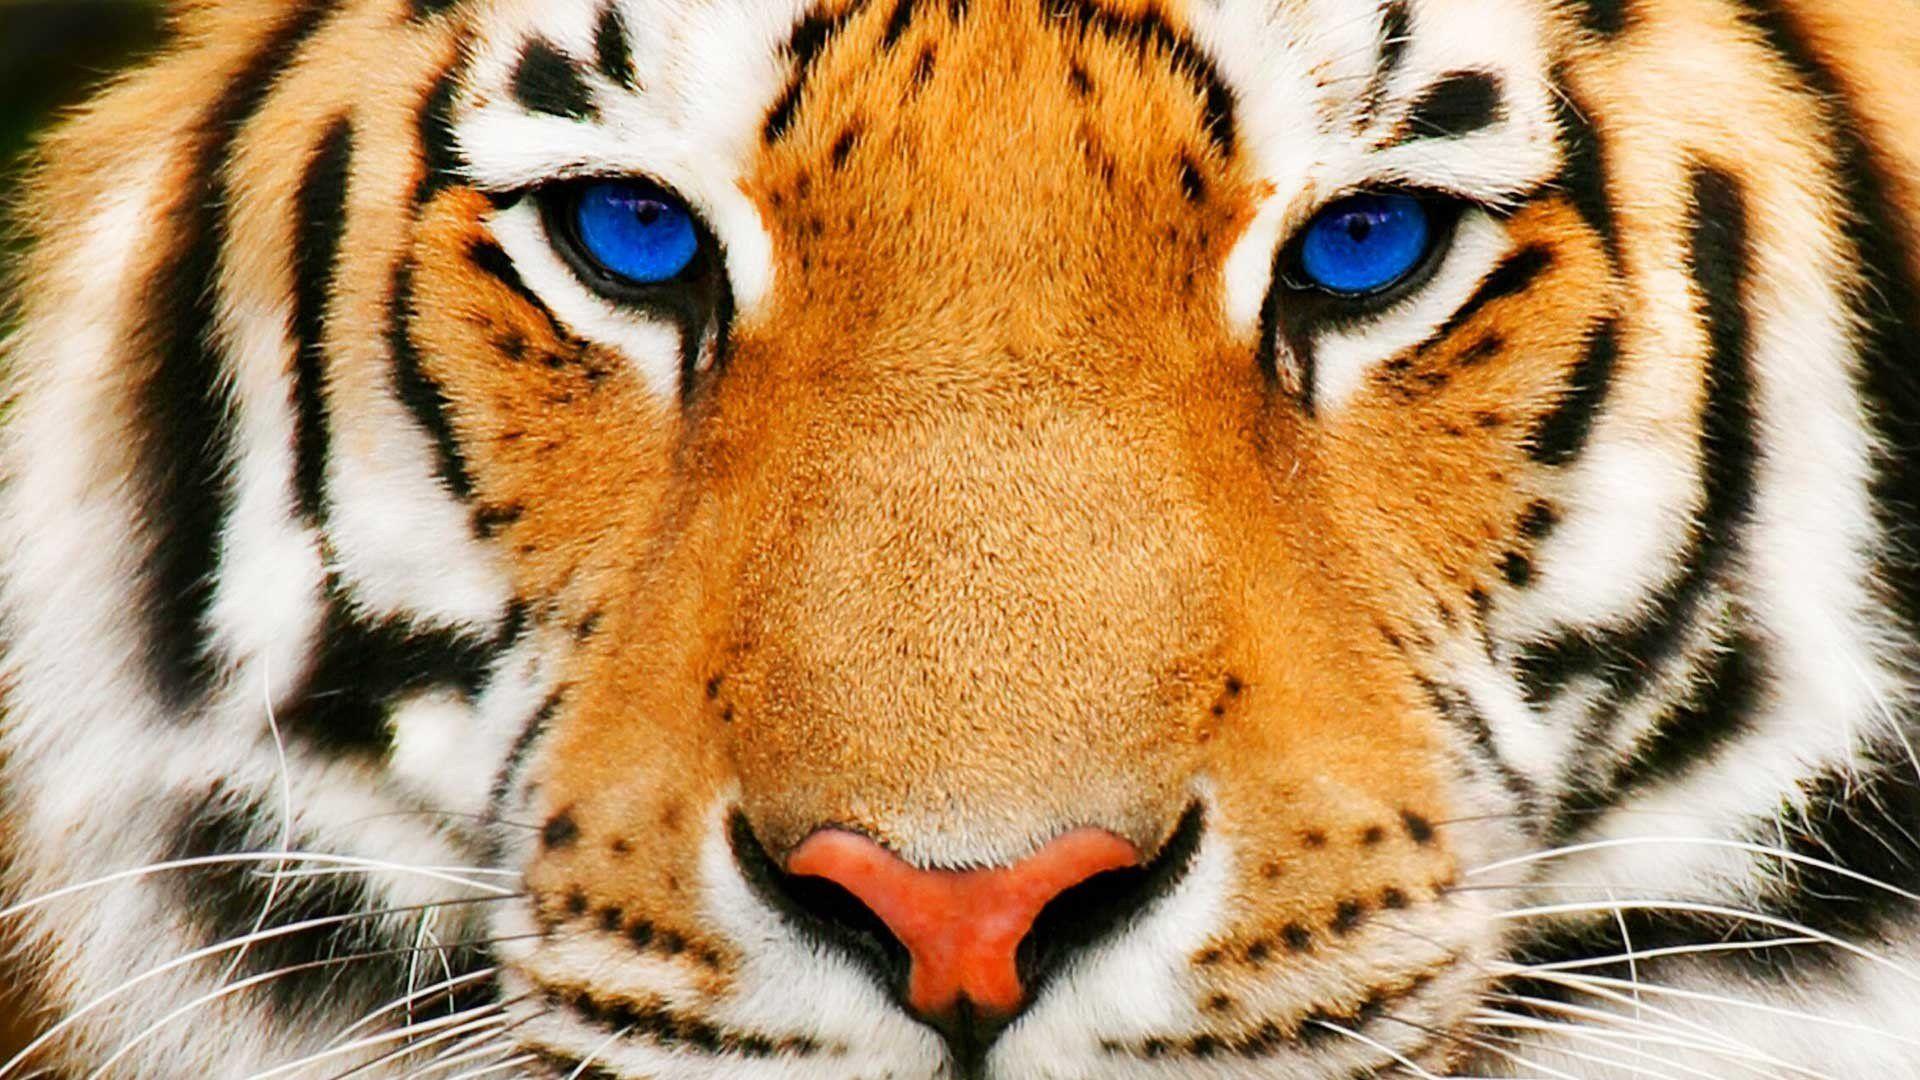 tiger face HD wallpaper. Desktop Background for Free HD Wallpaper. wall-art.com. Tiger image, Tiger wallpaper, Tiger face